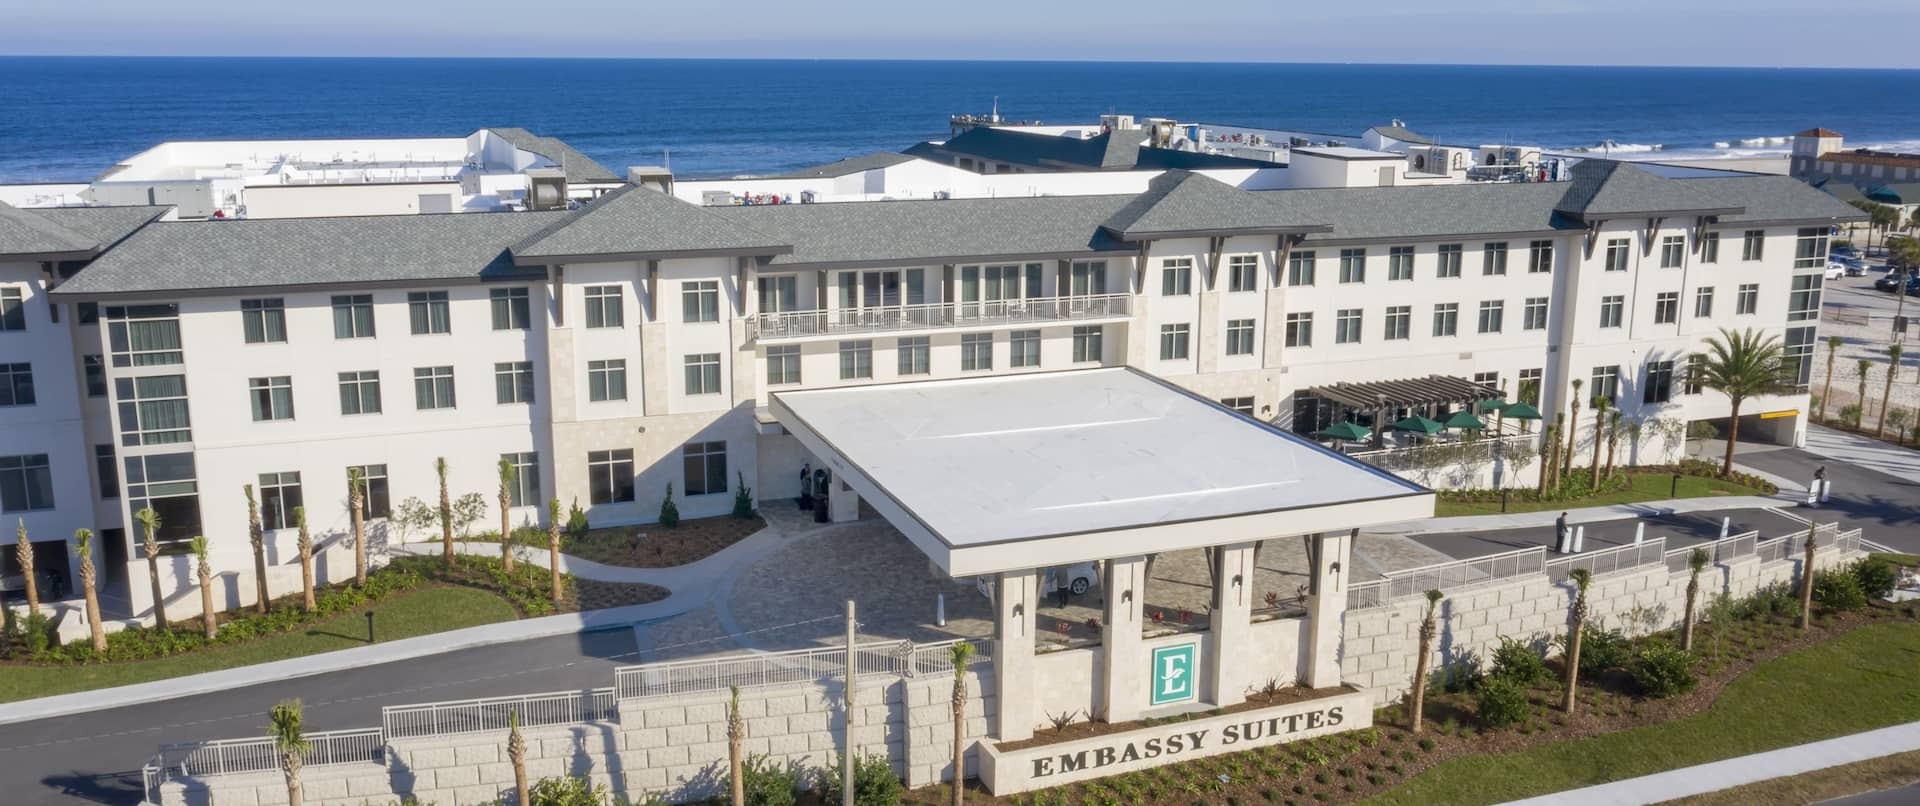 Photo of Embassy Suites by Hilton St. Augustine, Saint Augustine, FL